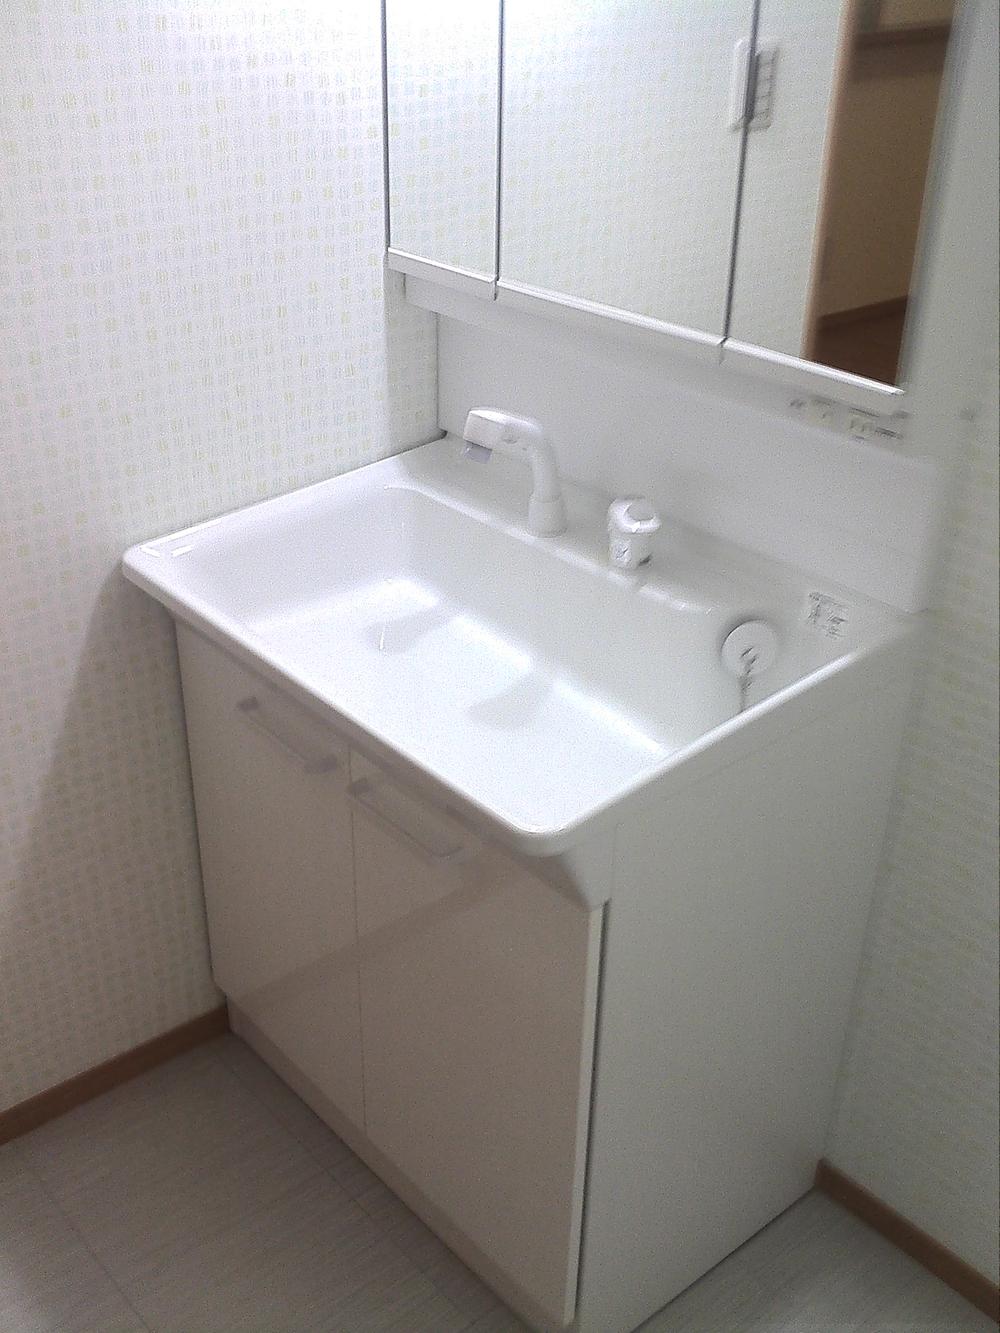 Wash basin, toilet. Vanity of a large sink